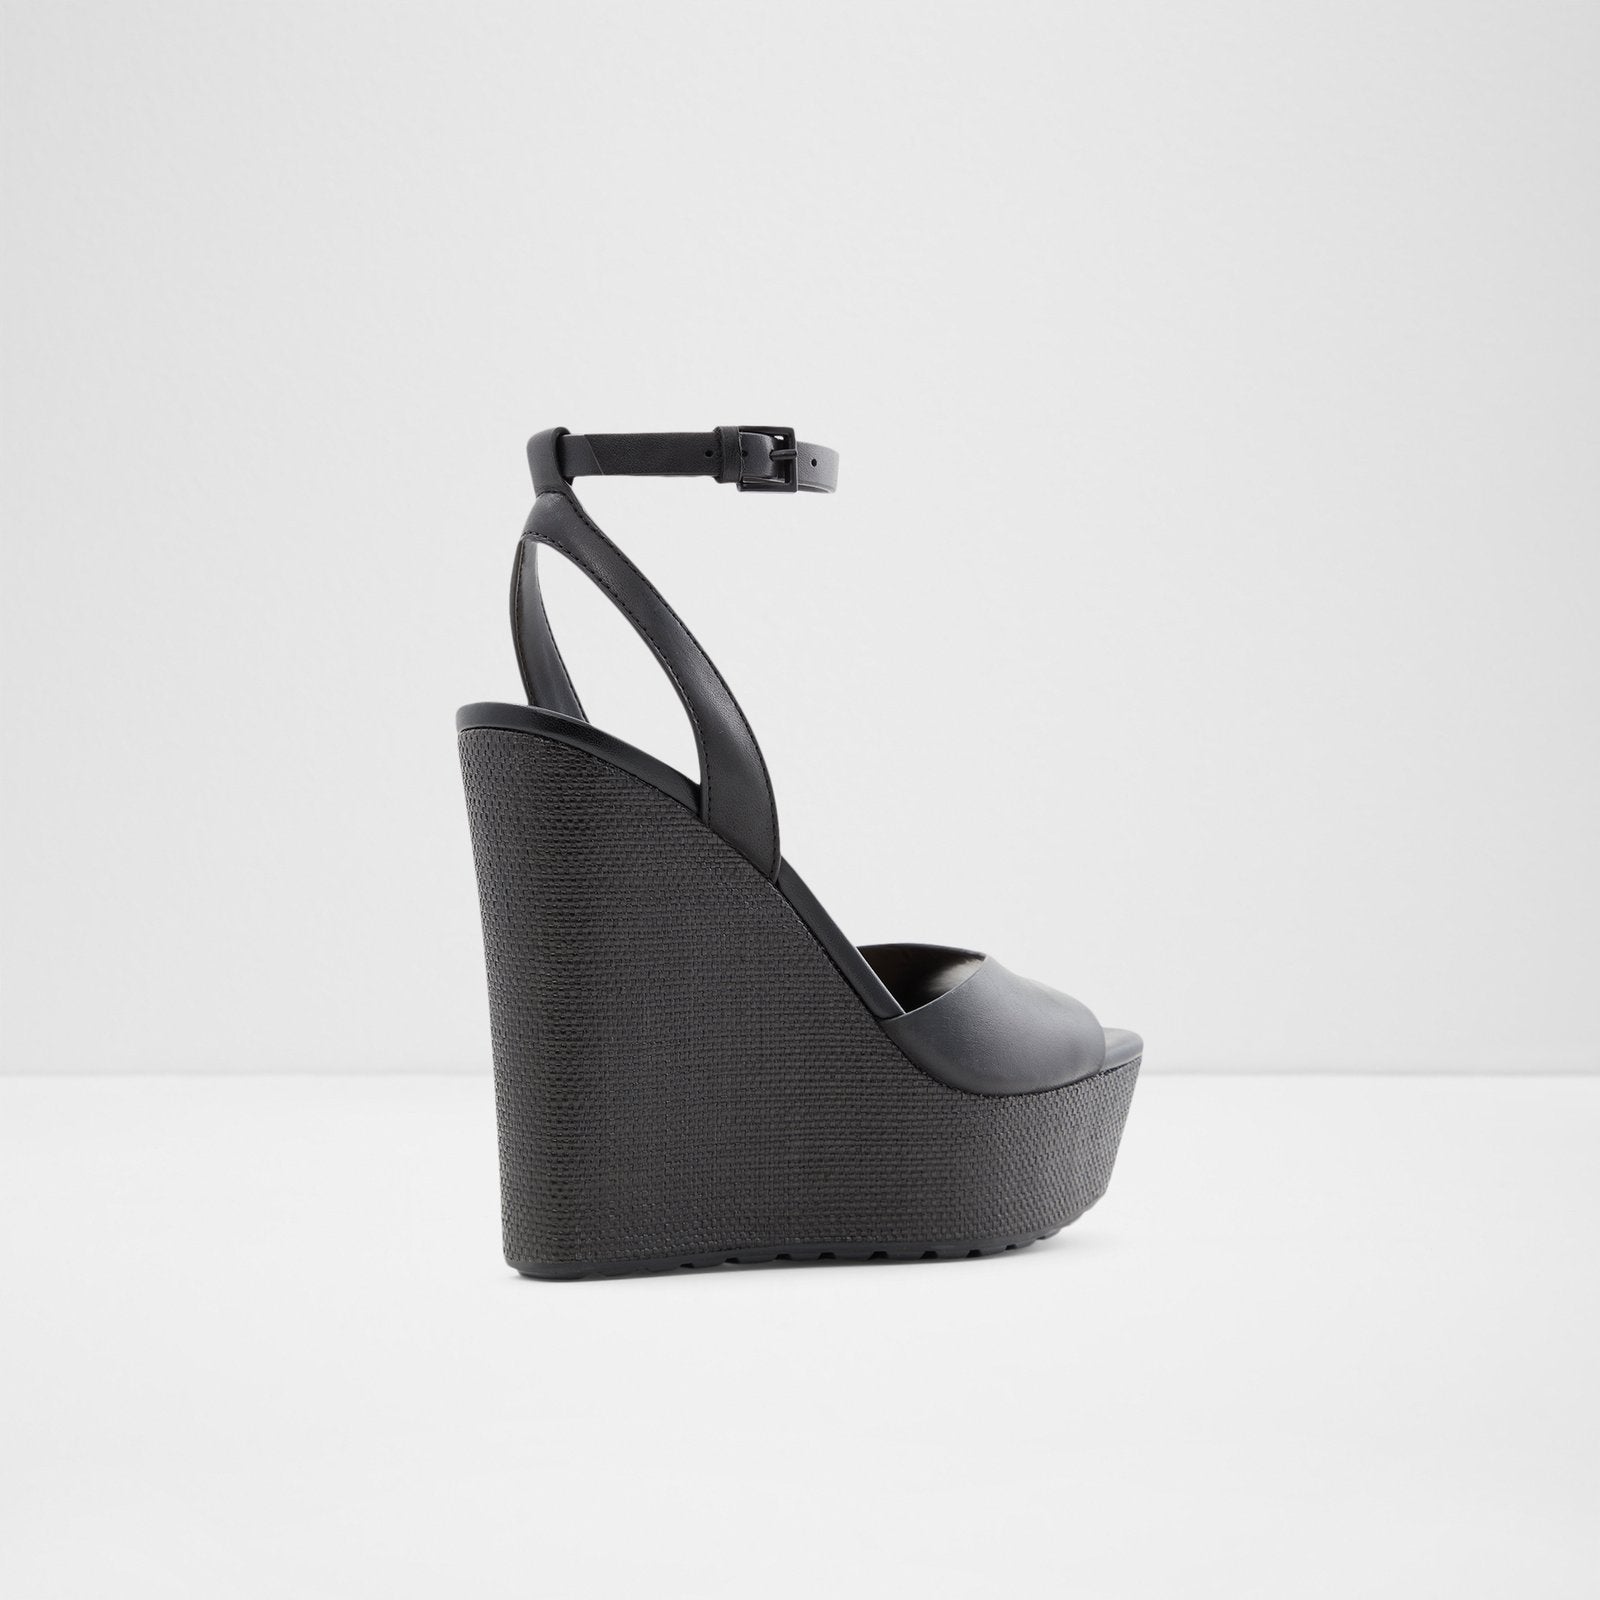 Verly Women Shoes - Black - ALDO KSA